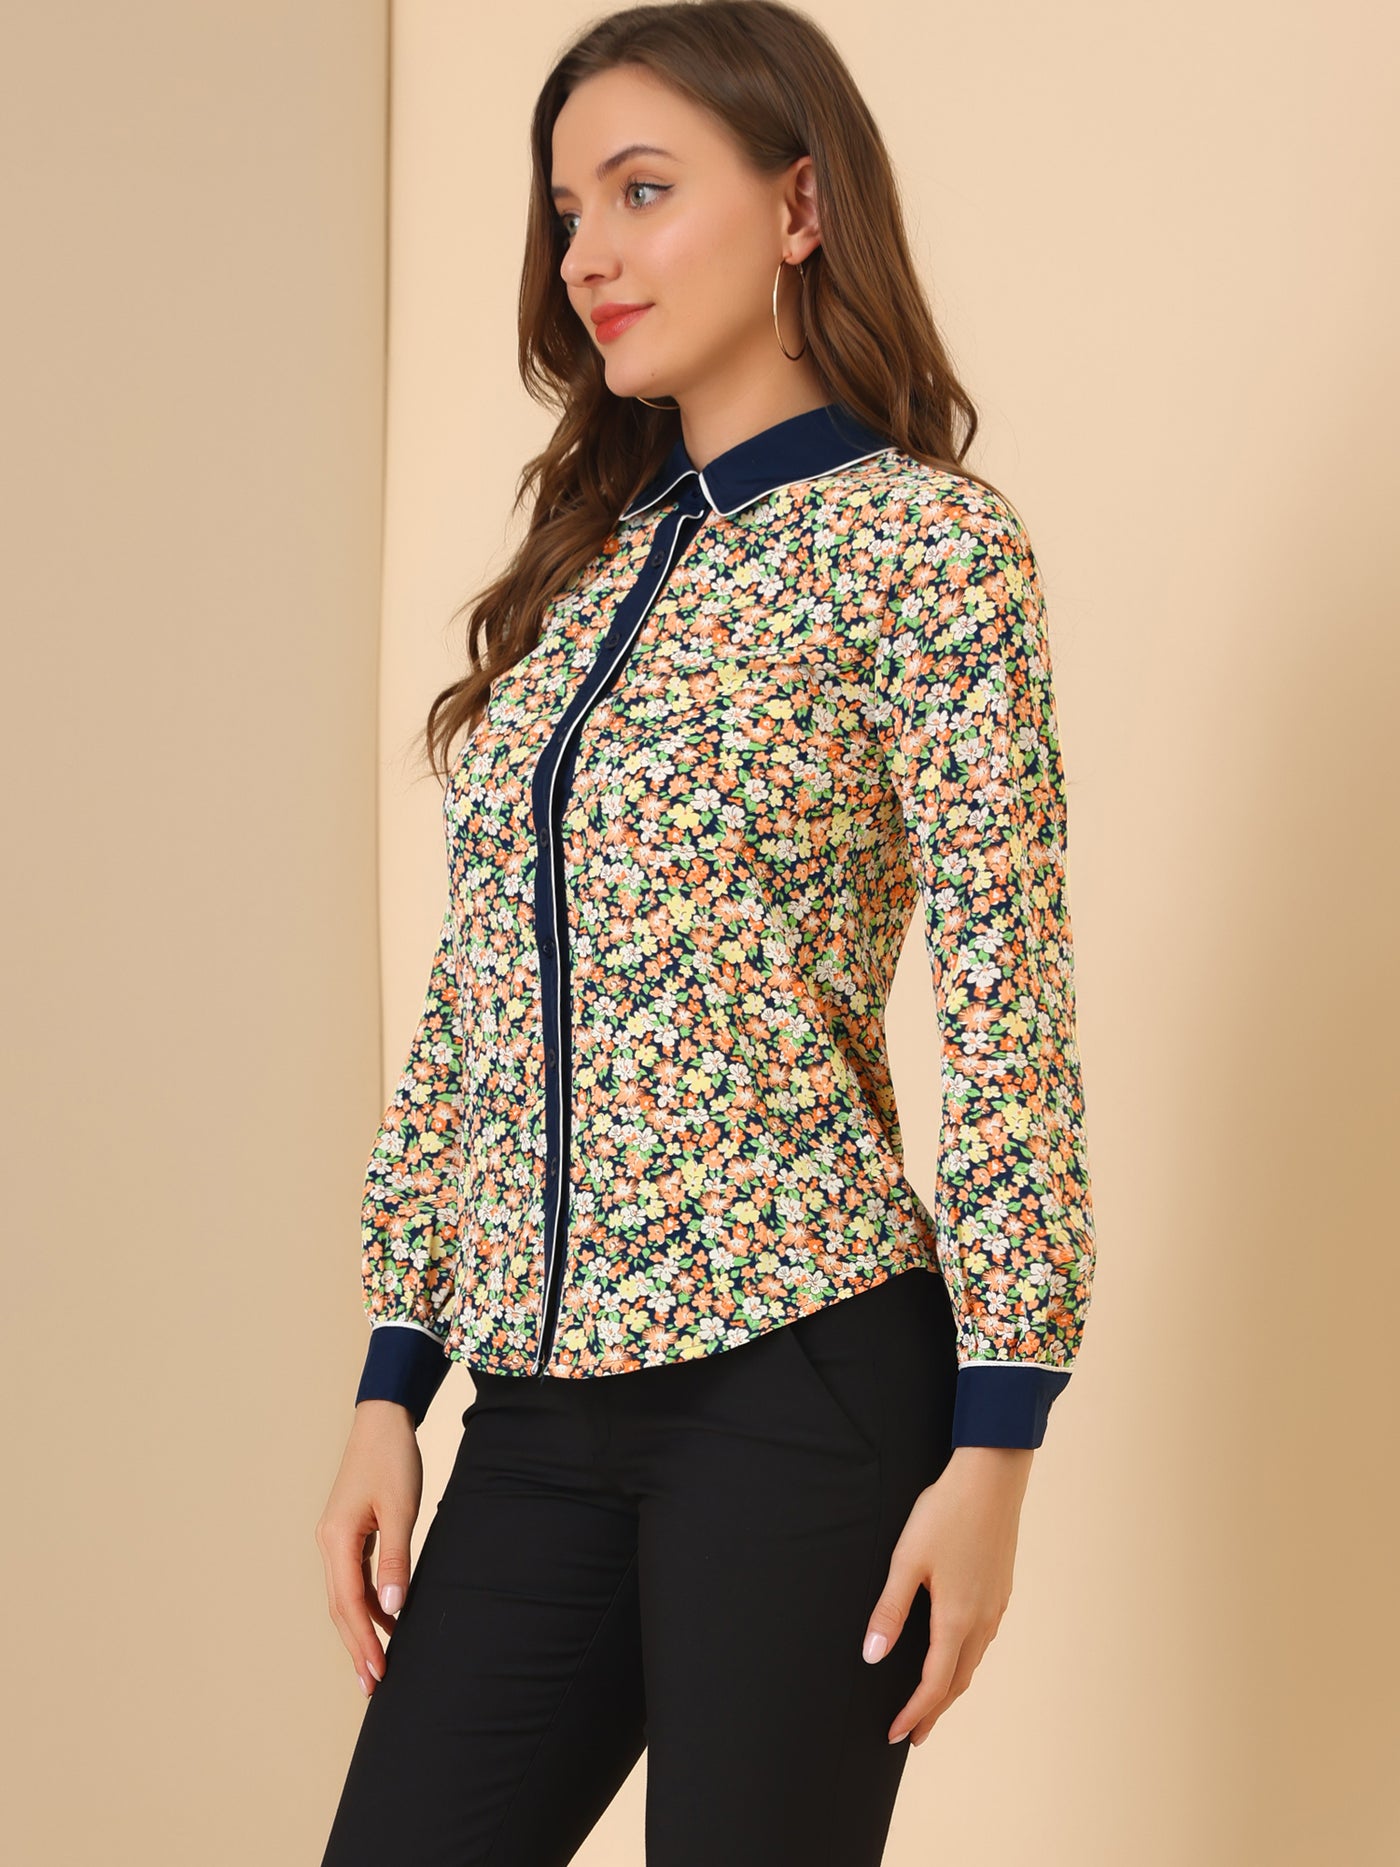 Allegra K Button Down Shirt Long Sleeve Contrast Collar Floral Blouse Top